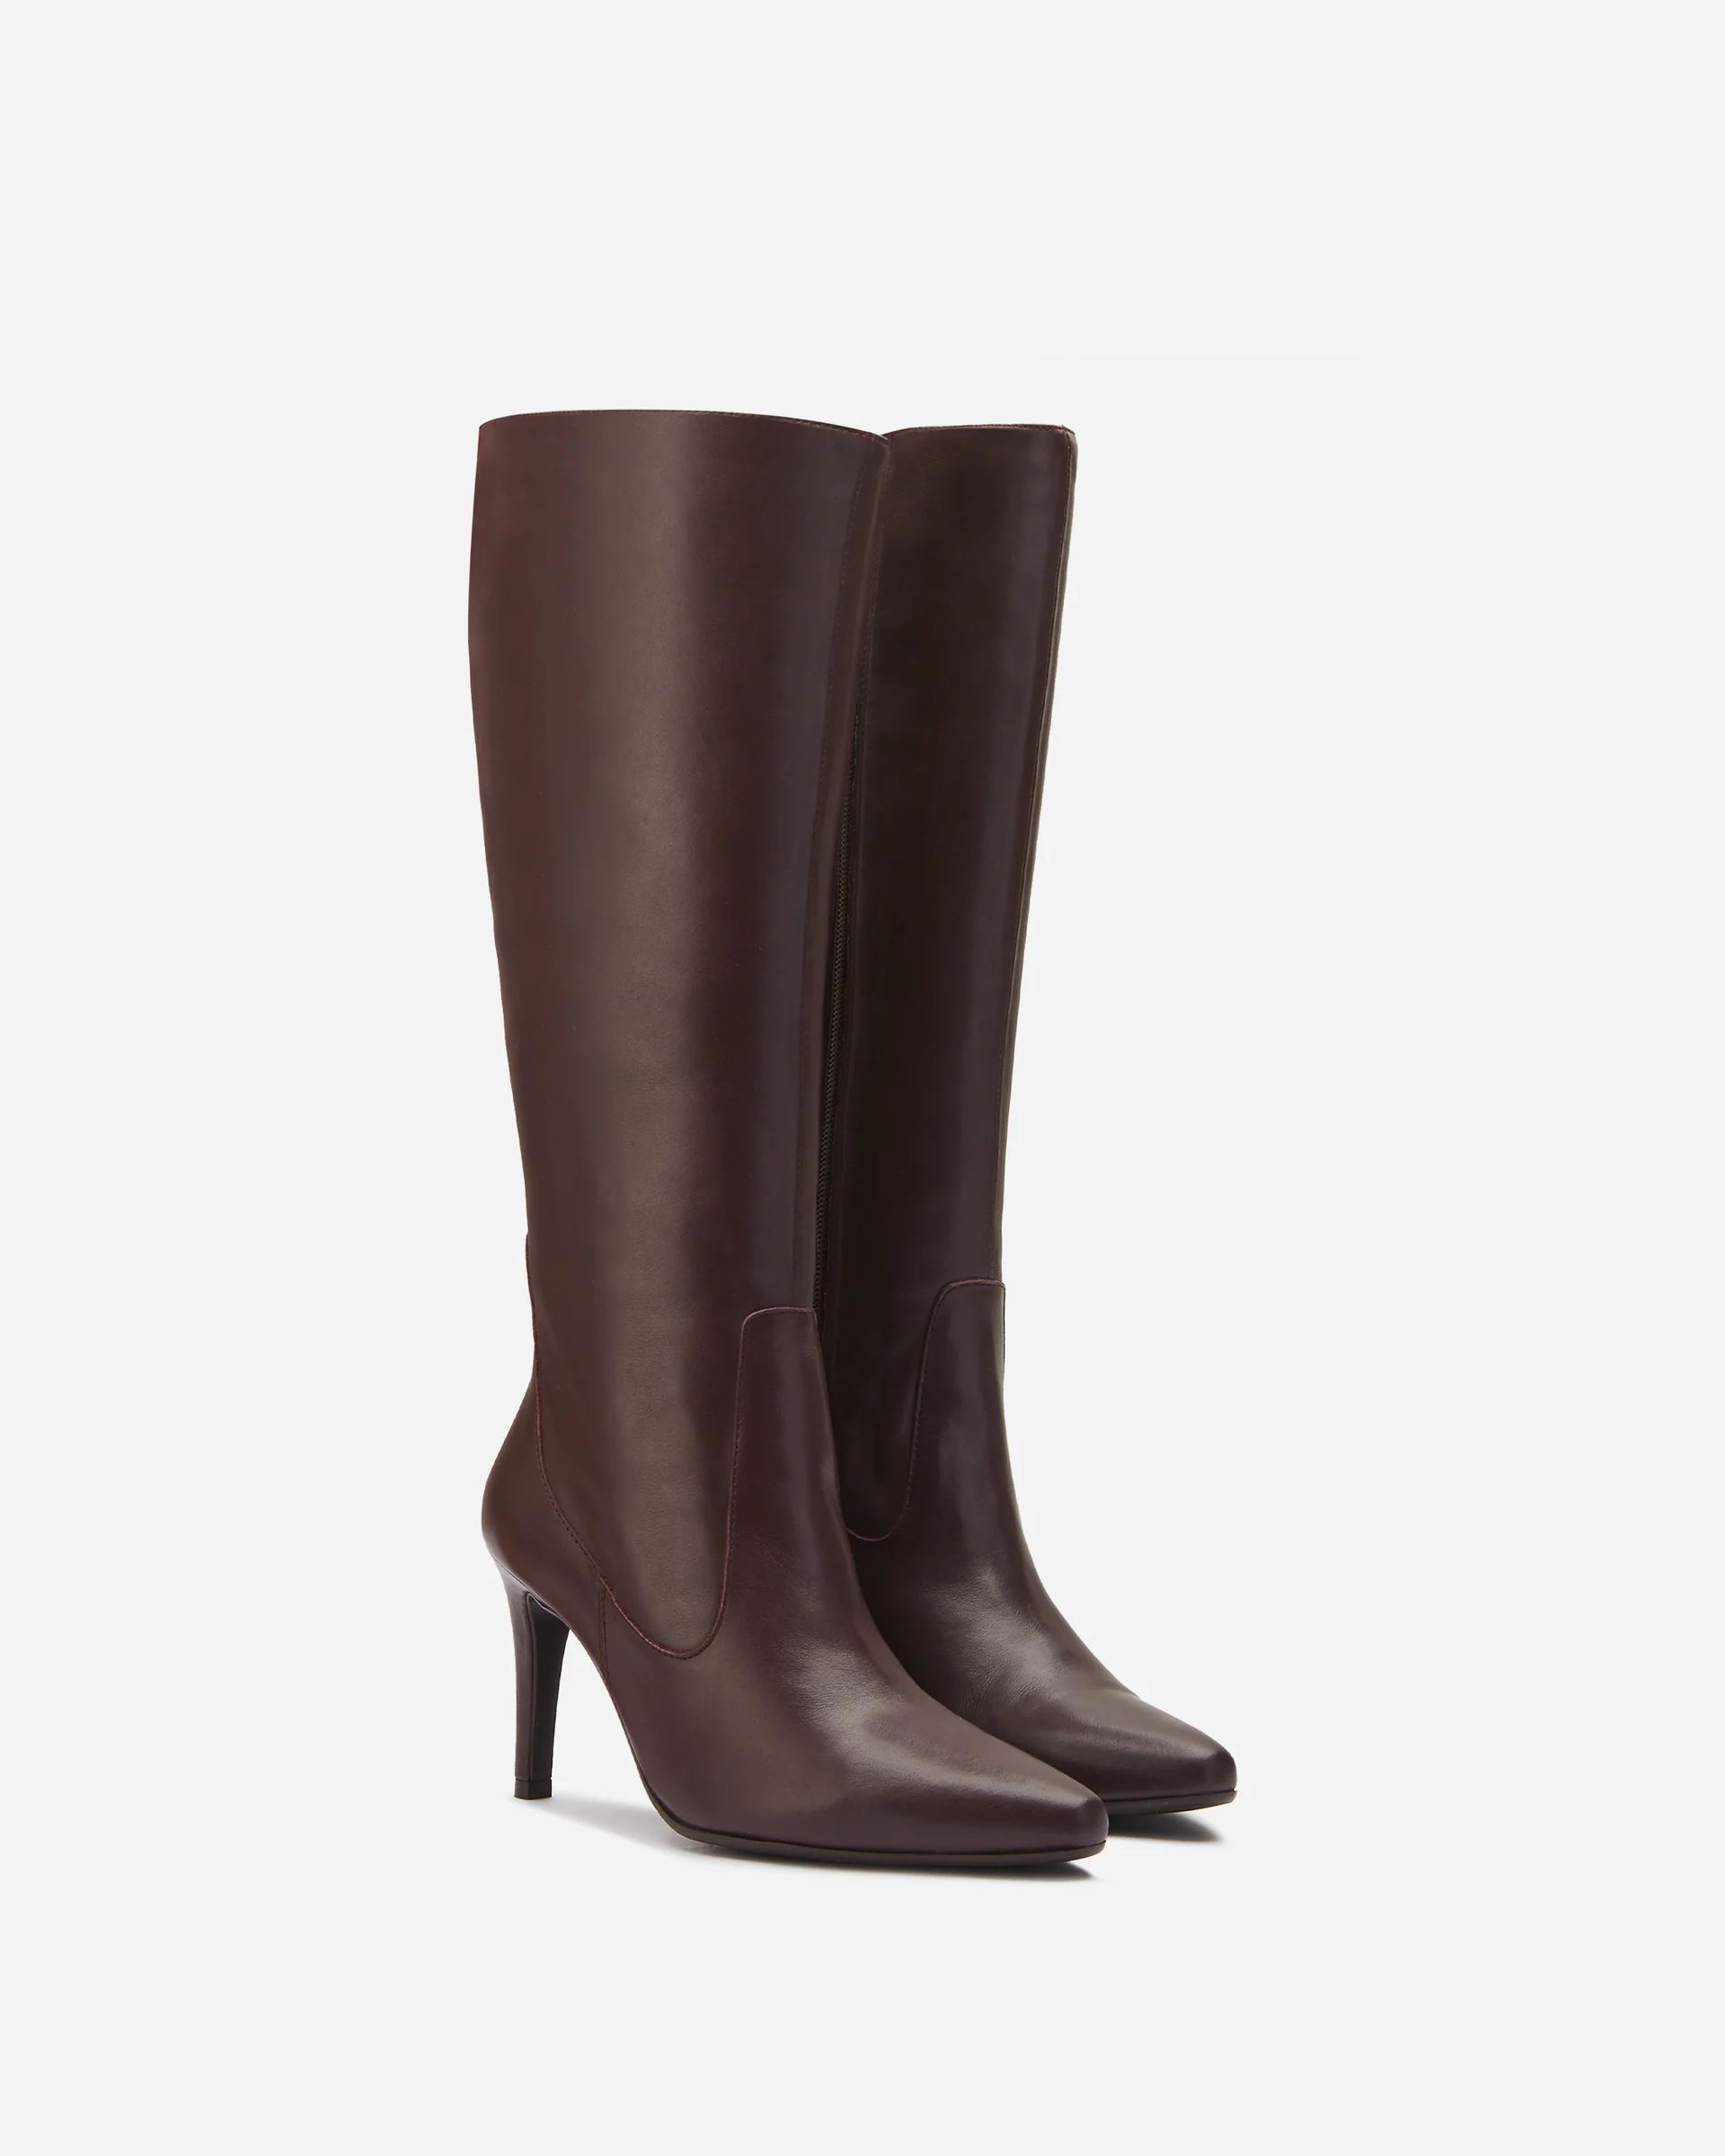 Freya Knee High Boots in Burgundy Leather | DuoBoots